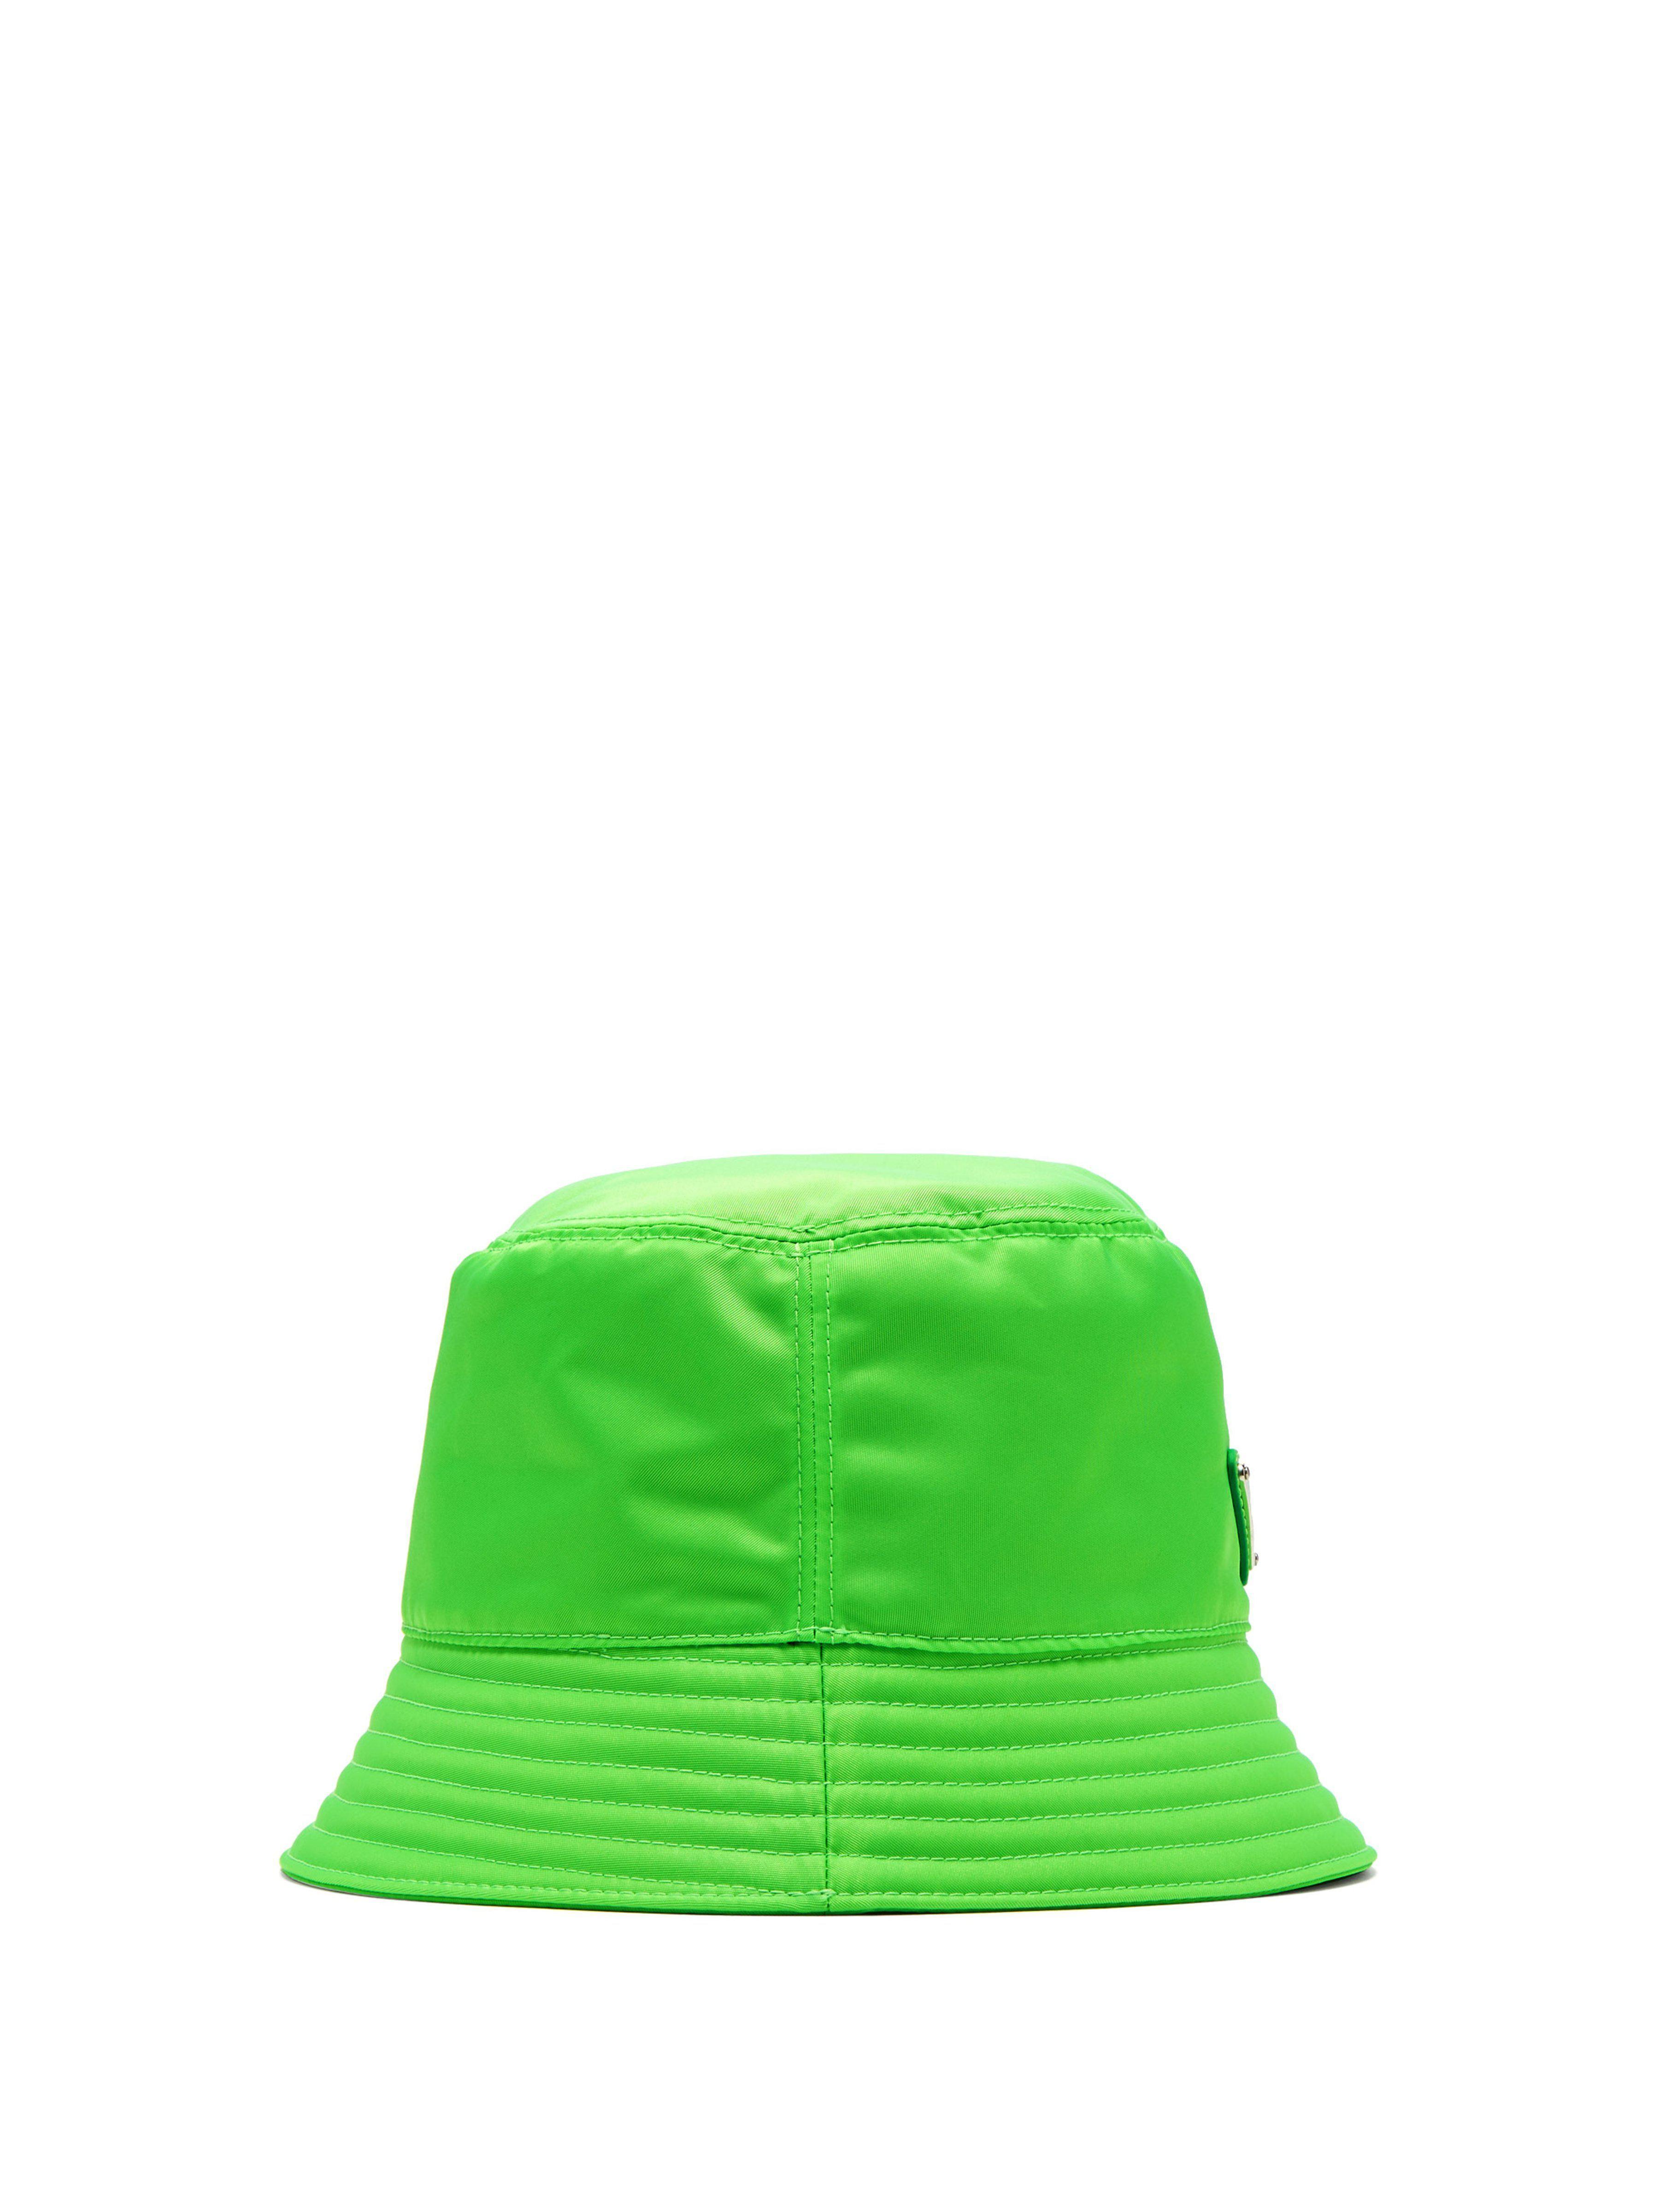 Green Triangle Logo - Prada Triangle Logo Bucket Hat in Green for Men - Lyst